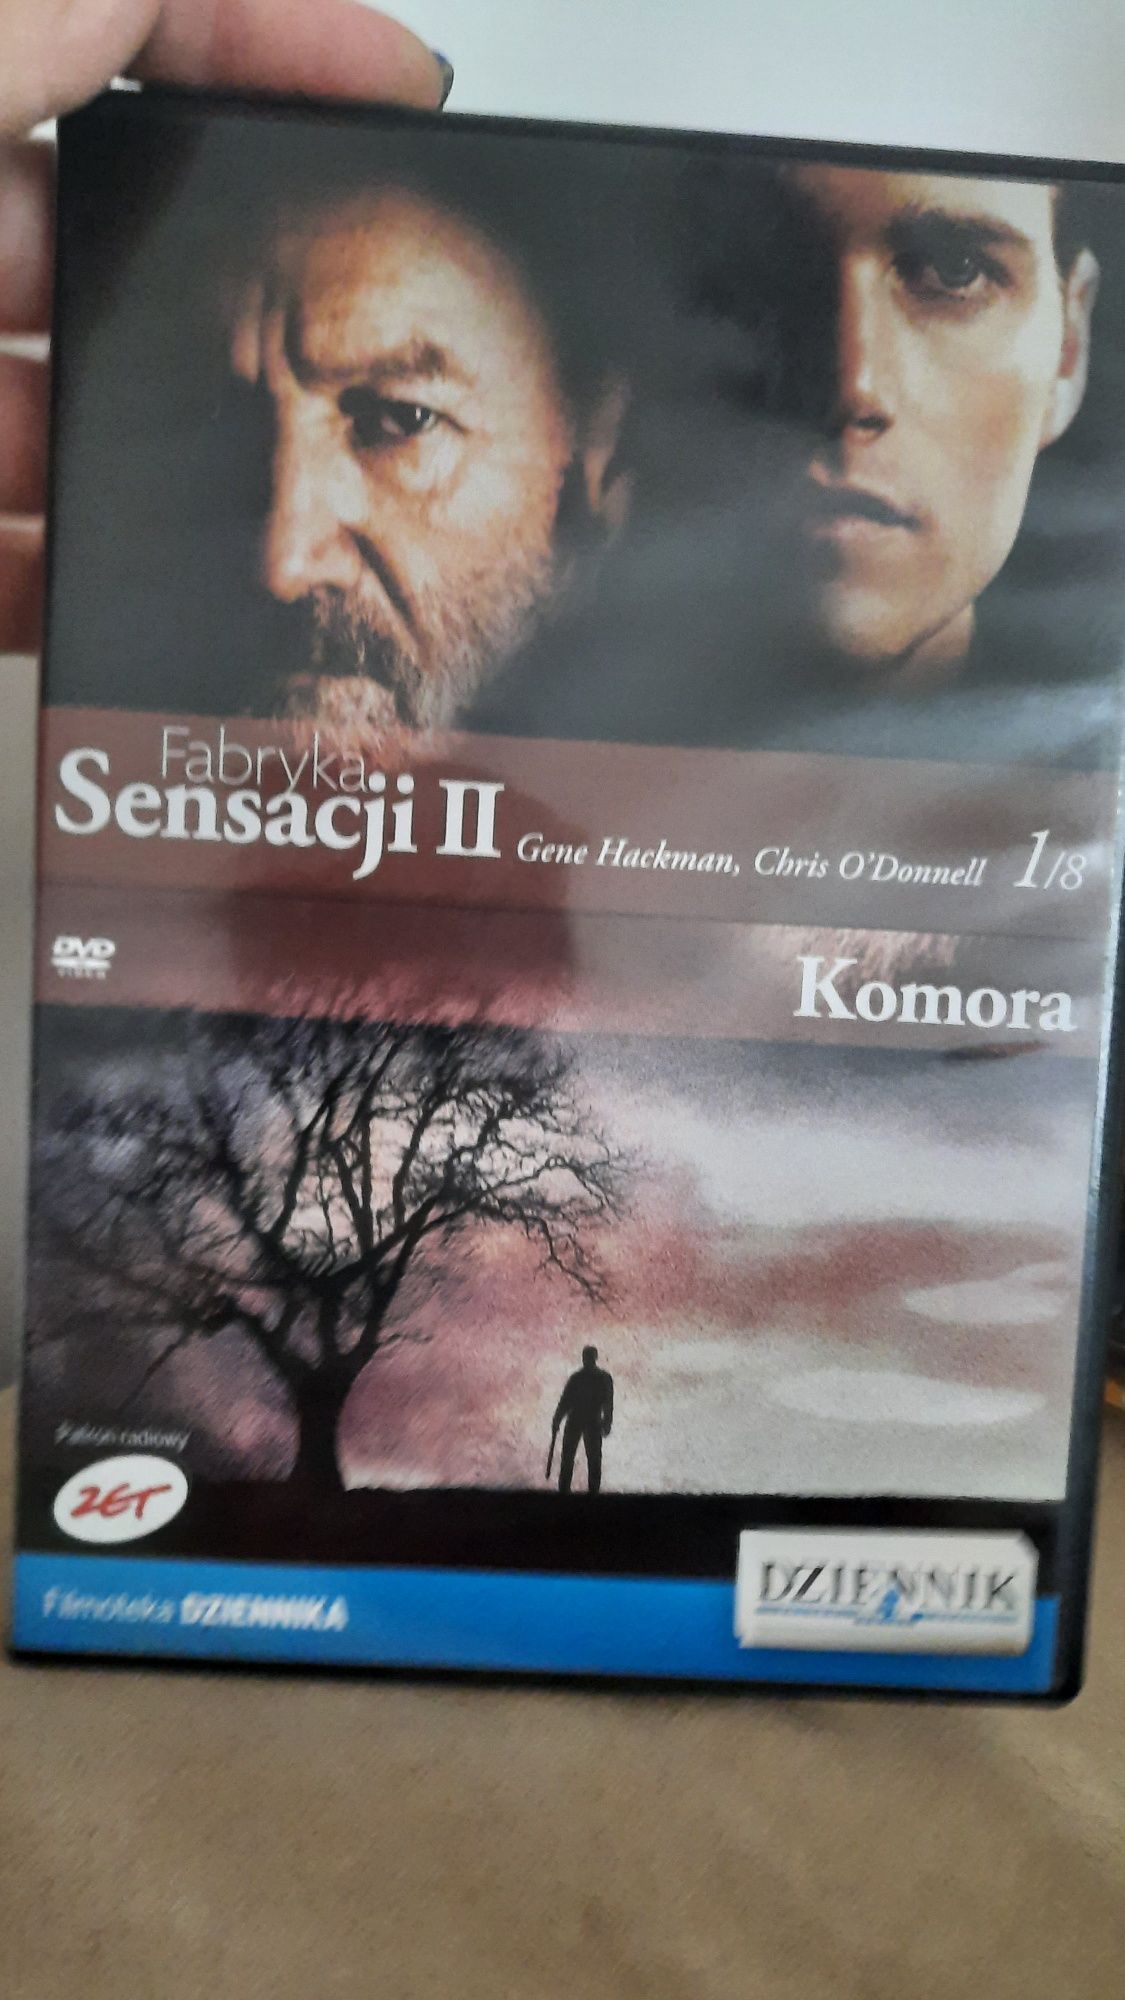 Film - "Komora "